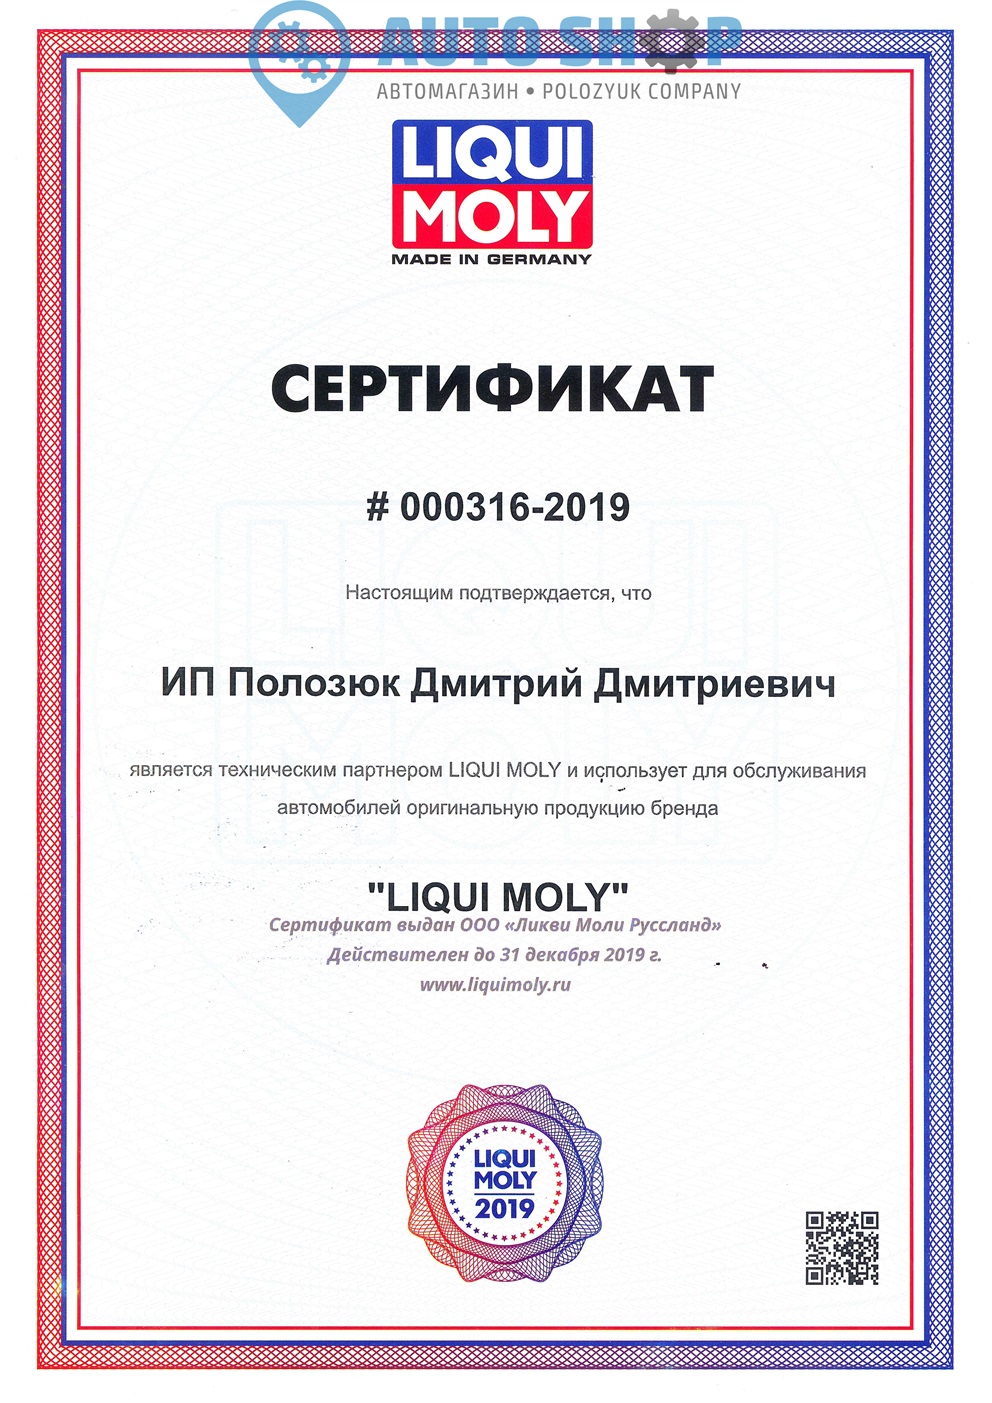 Liqui Moly сертификат